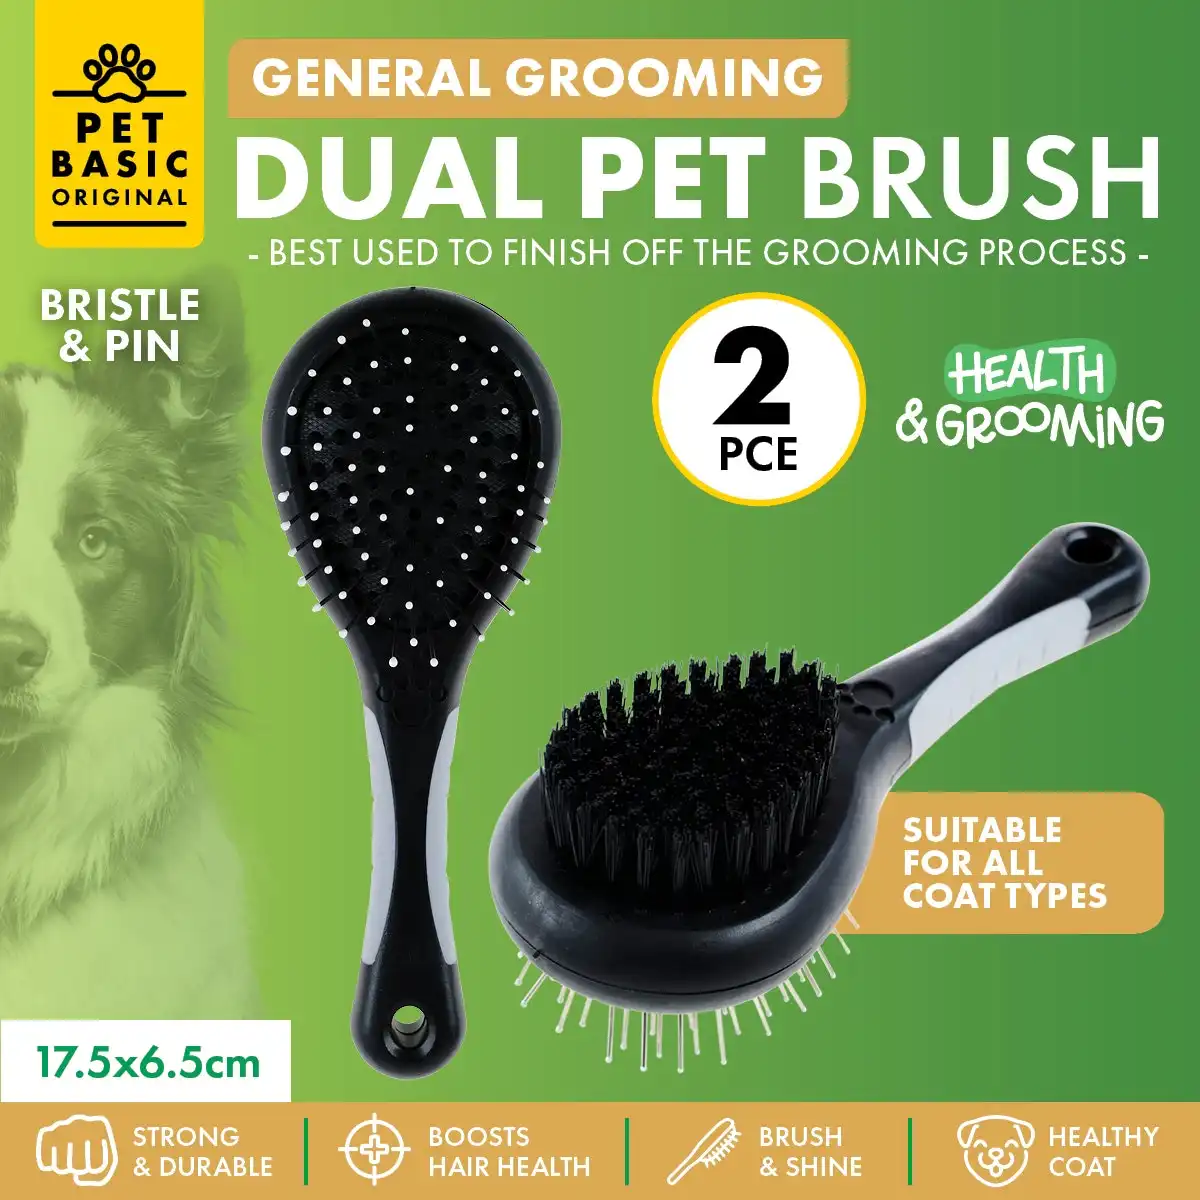 Pet Basic® 2PCE Dual Grooming Brush Gentle Bristles Remove Excess Fur 17.5cm